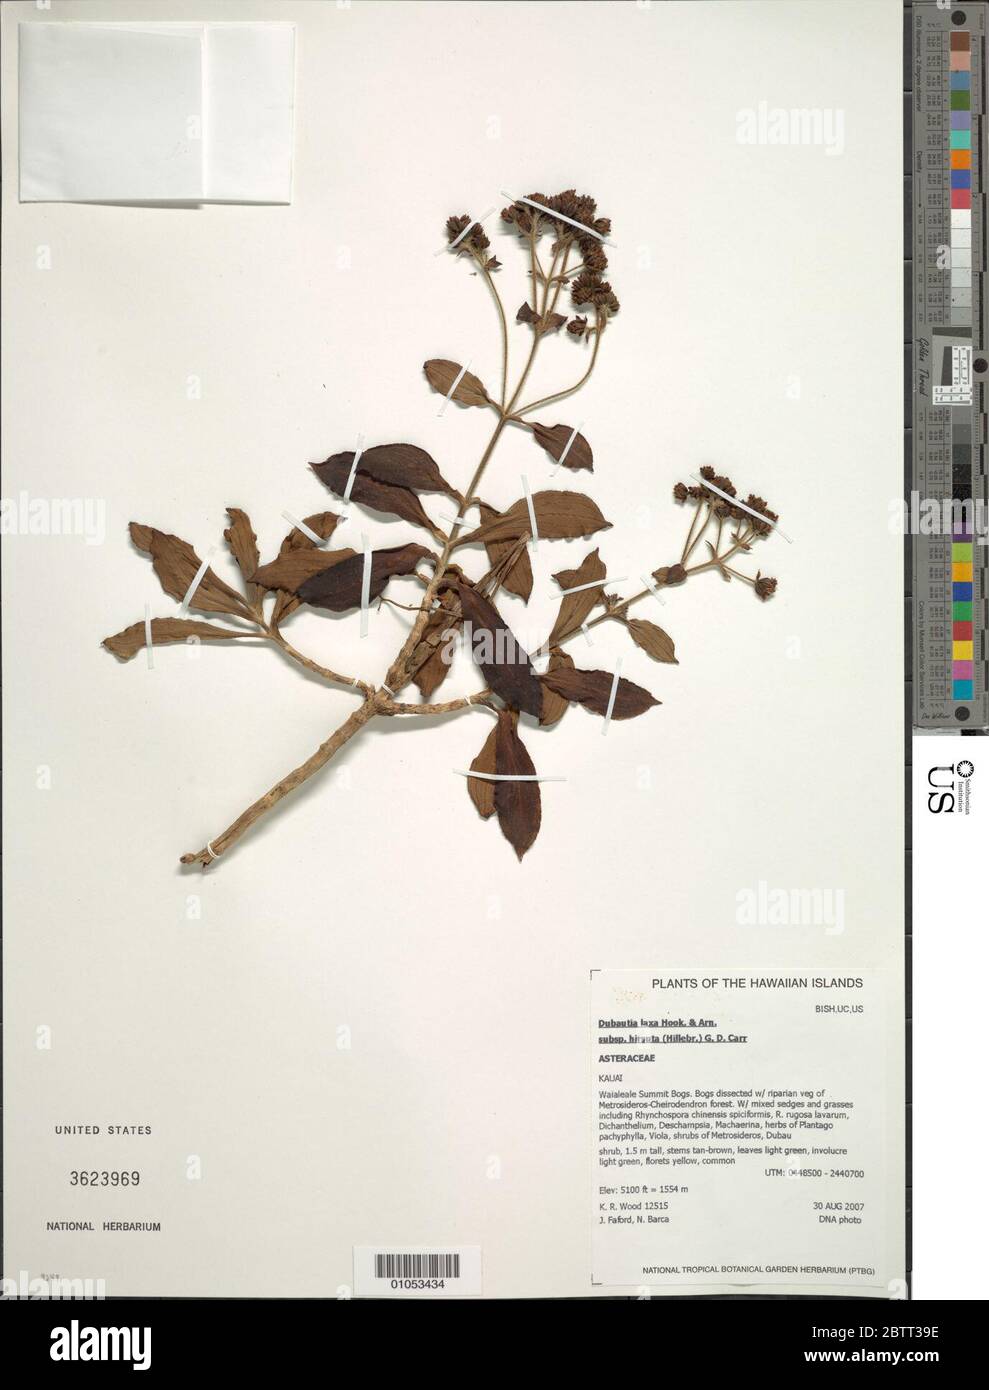 Dubautia laxa subsp hirsuta Hillebr GD Carr. Stock Photo